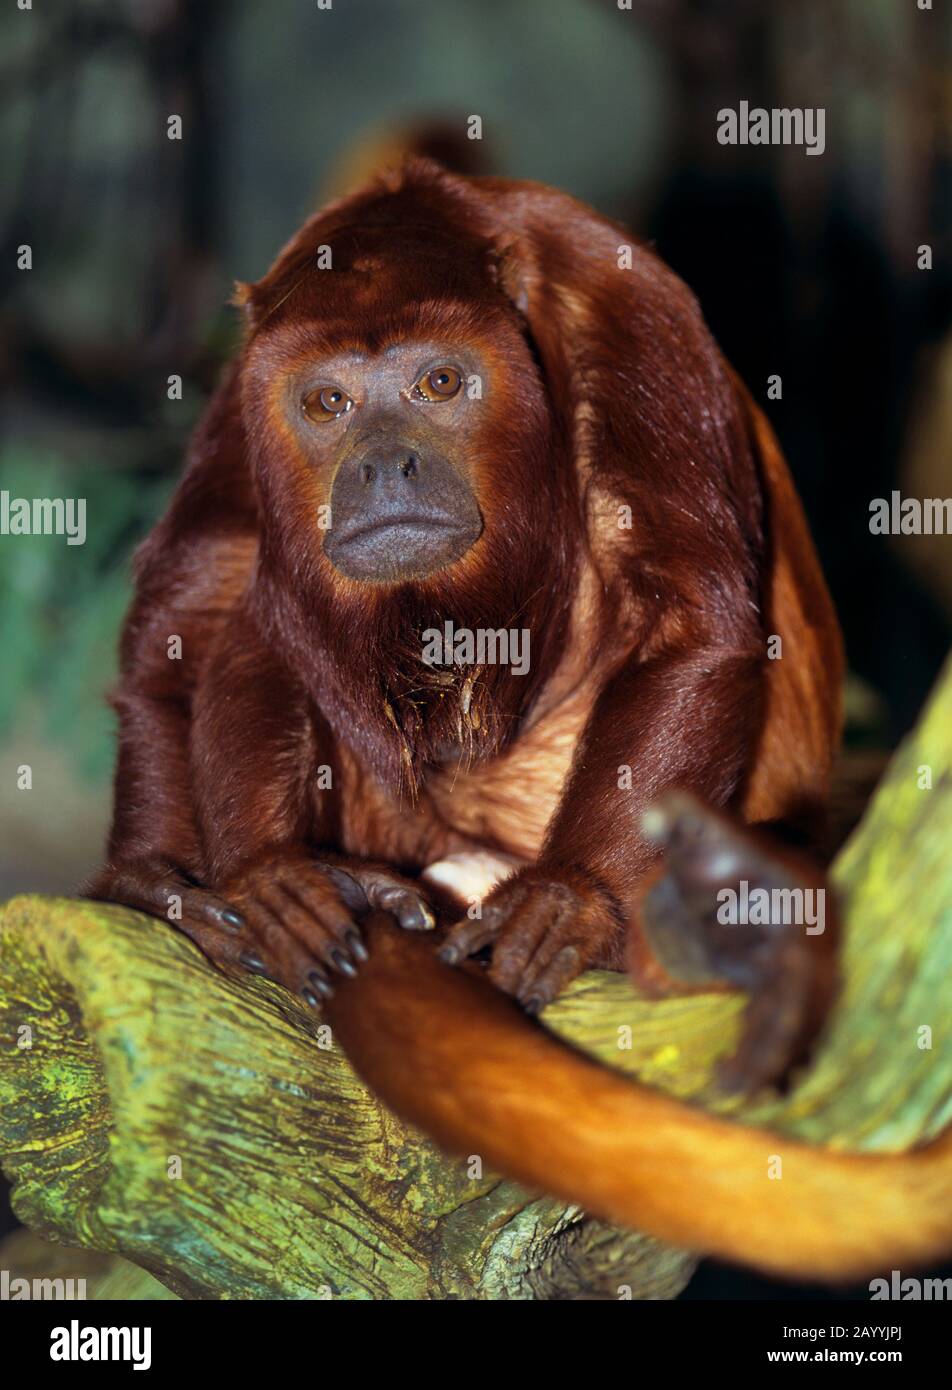 Mono Red Howler (Alouatta ursina), sentado en una rama, vista frontal Foto de stock